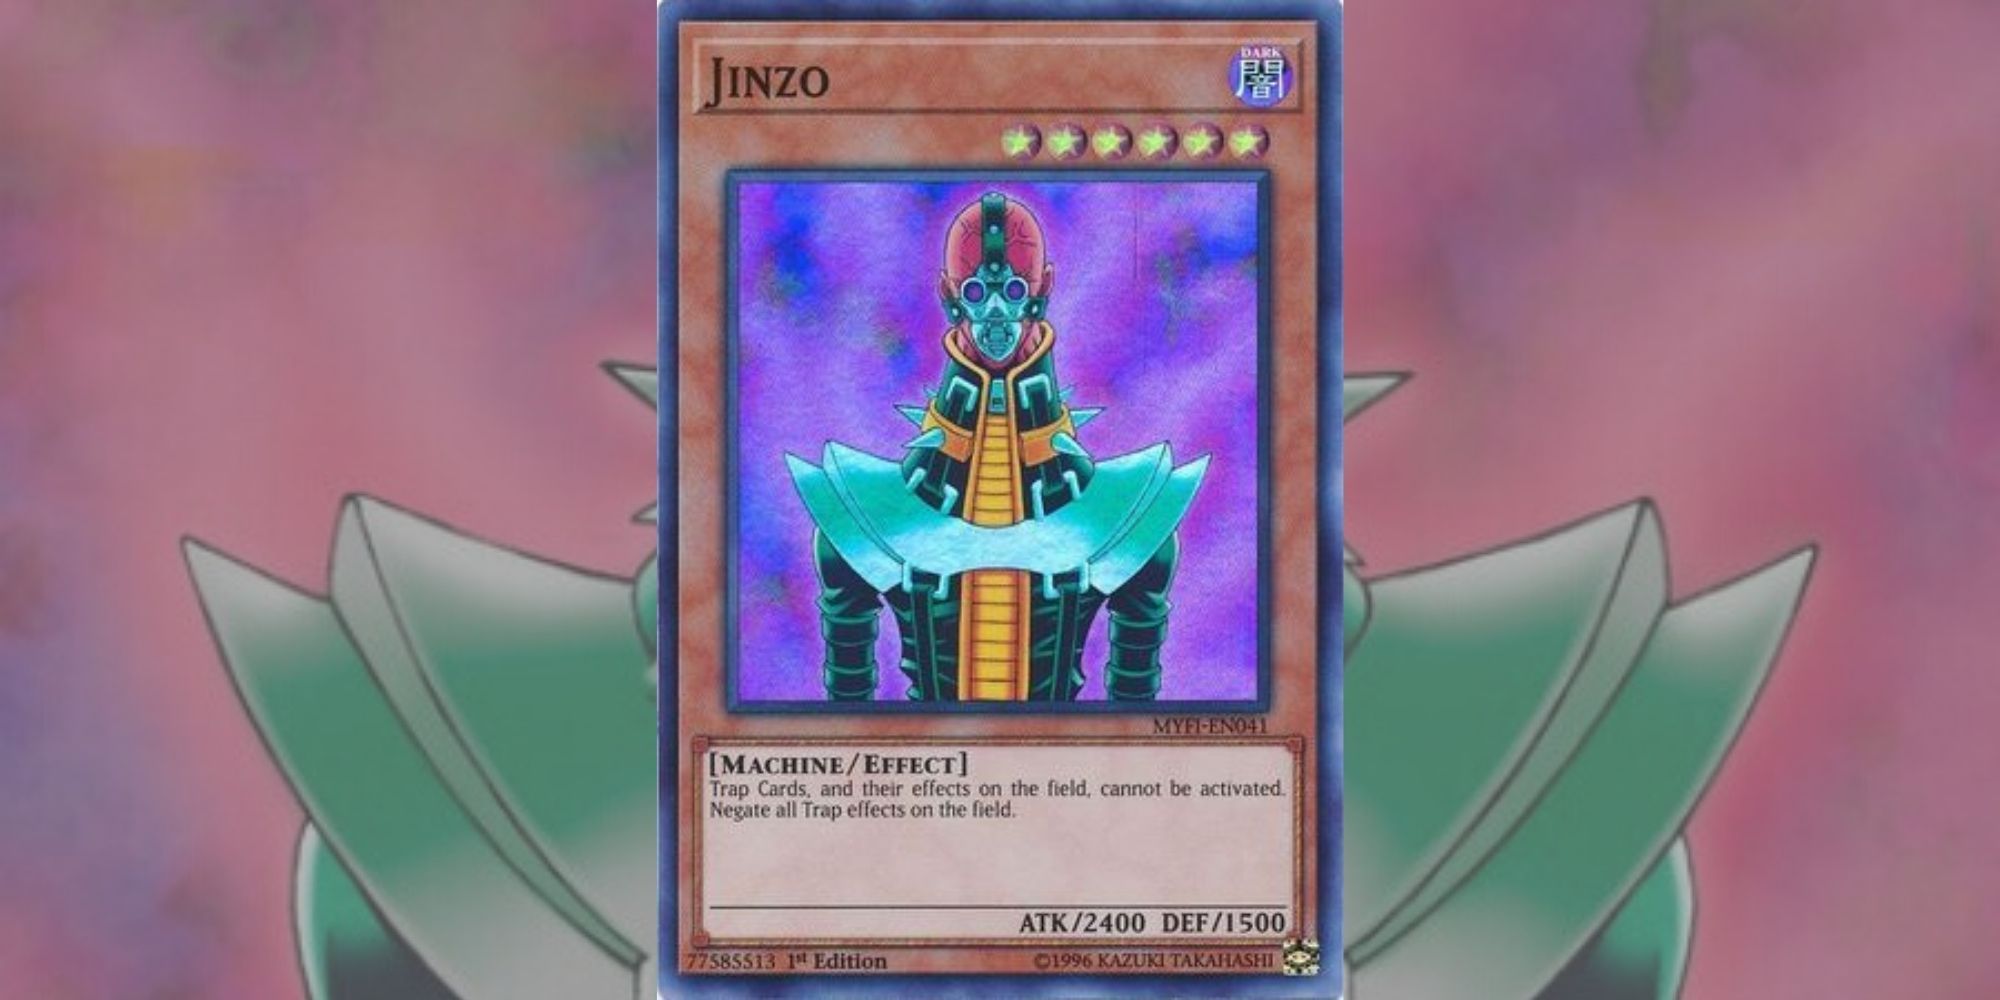 Yu-Gi-Oh! Card Jinzo against background made from card art.